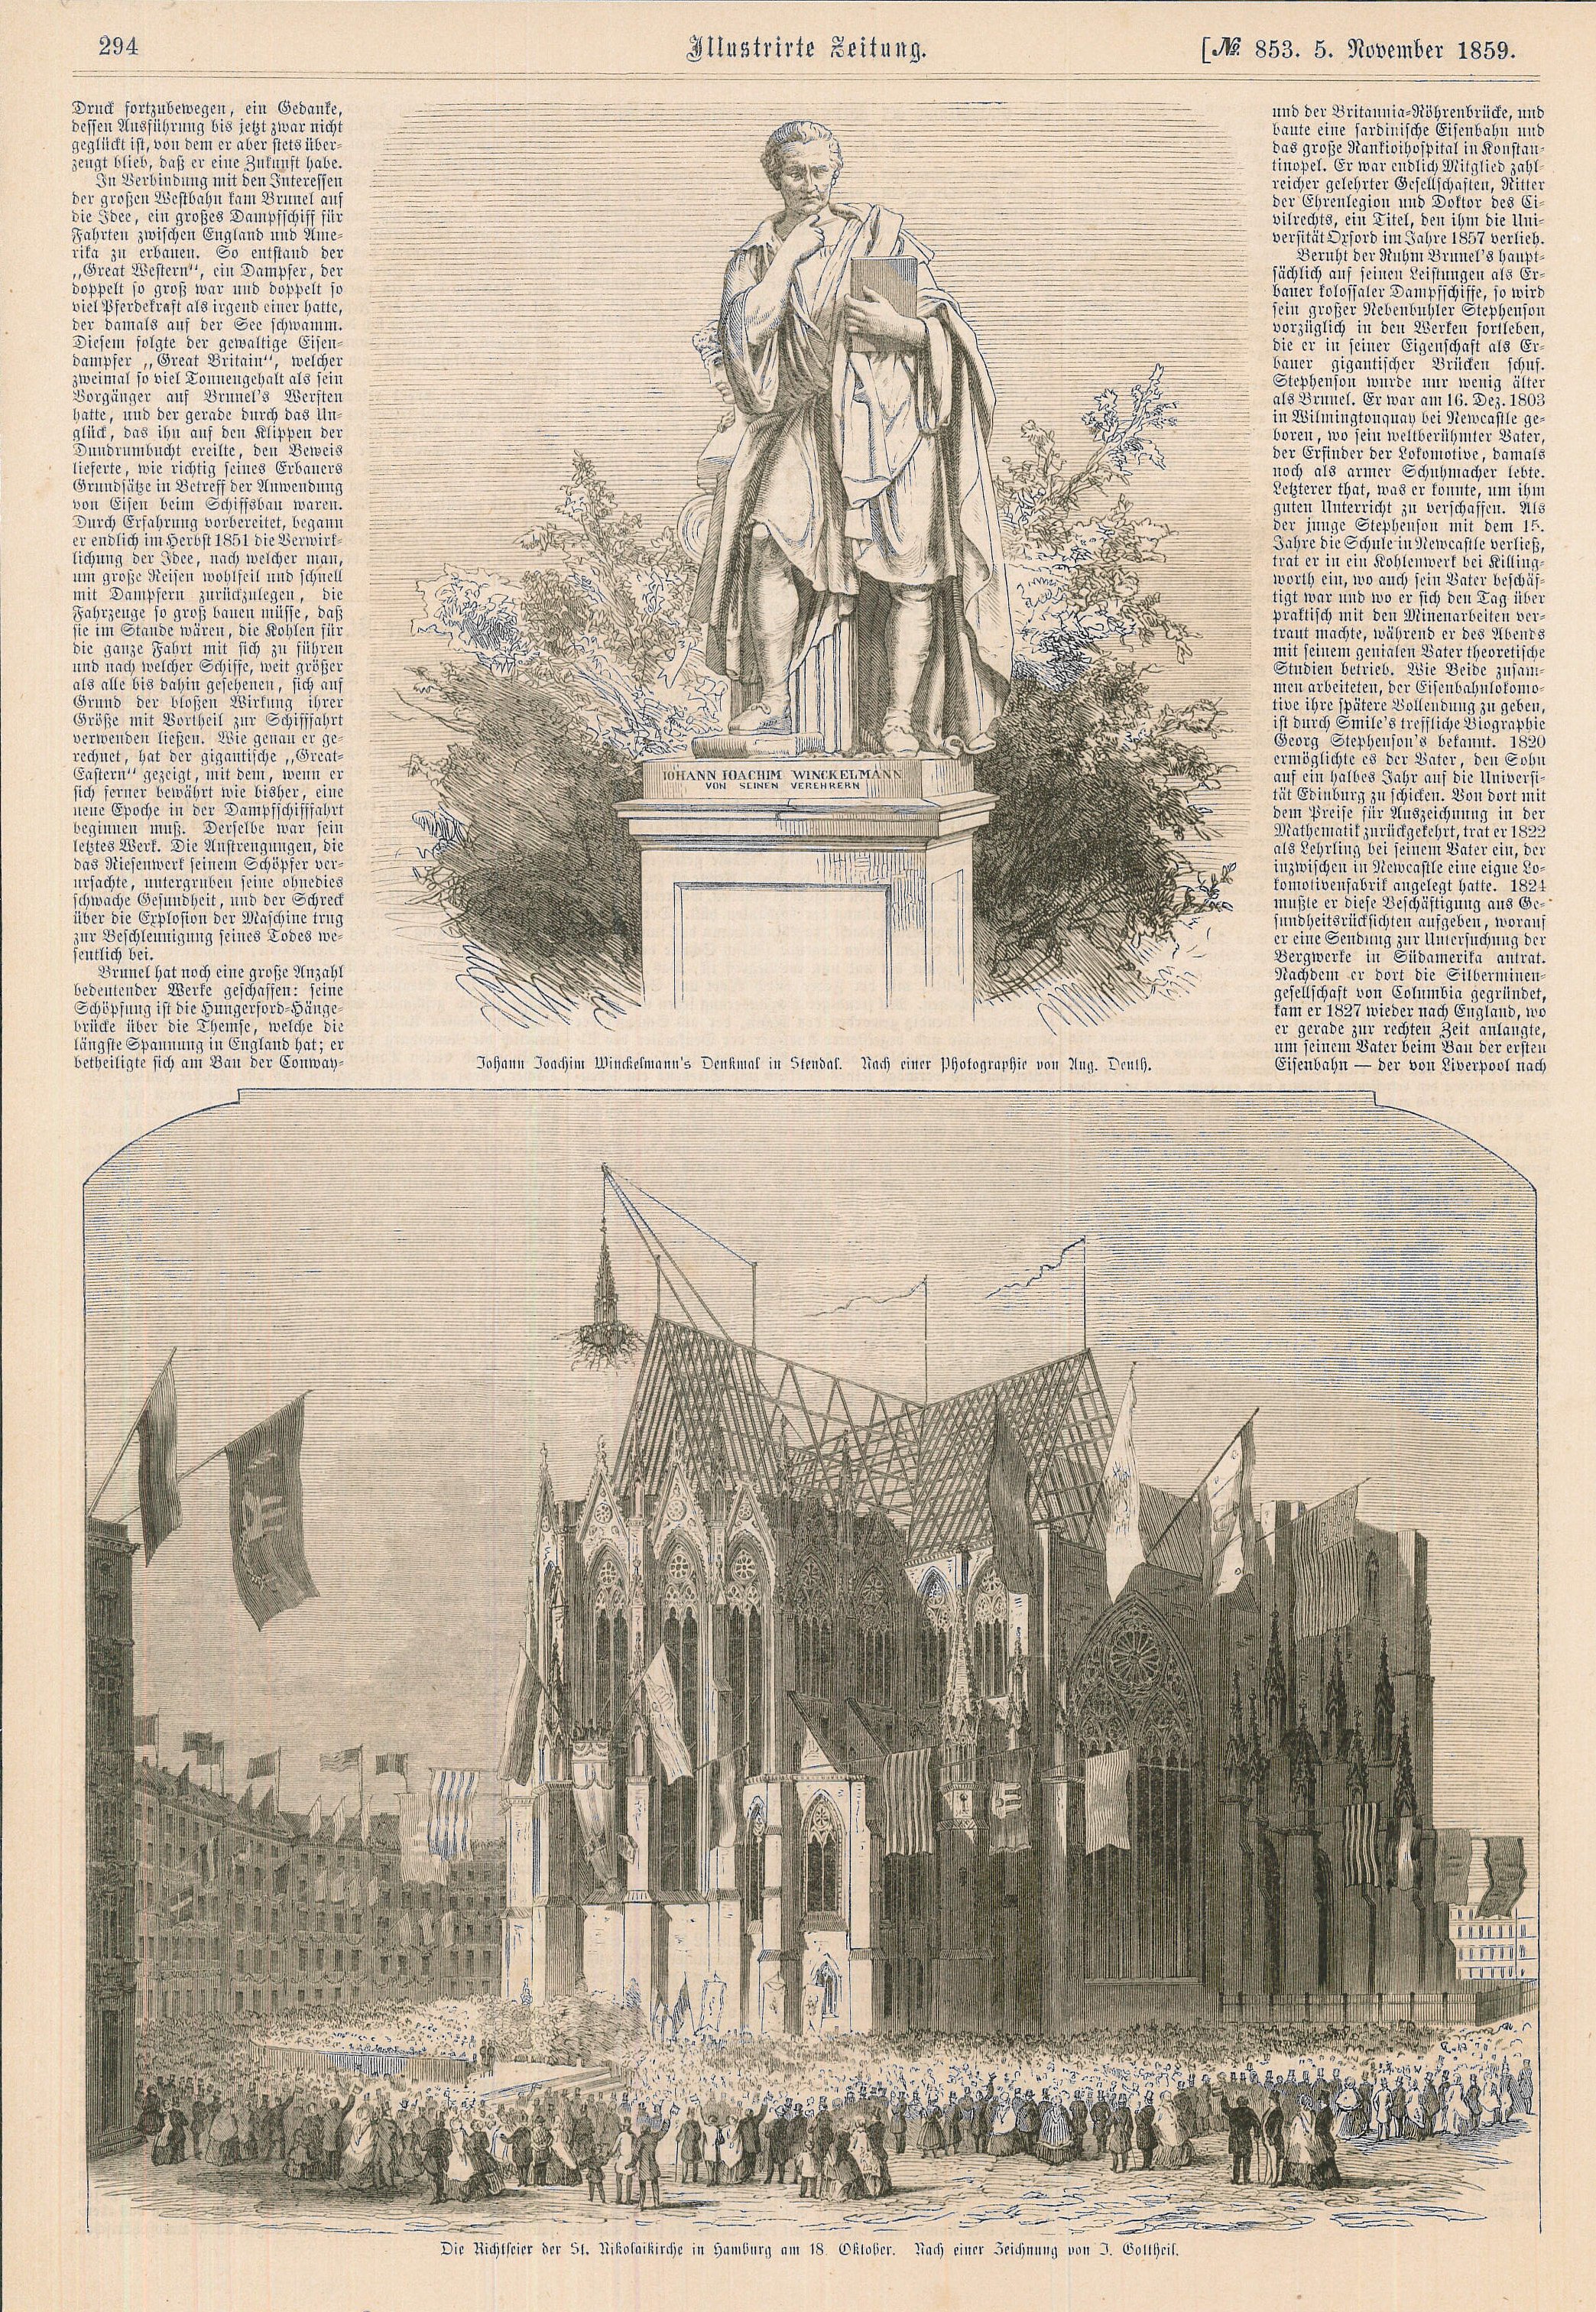 Johann Joachim Winckelmann's Denkmal in Stendal, in: Illusmierk Zeitung Nr. 853, vom 5. Nov. 1859, S. 294 (Winckelmann-Museum Stendal CC BY-NC-SA)